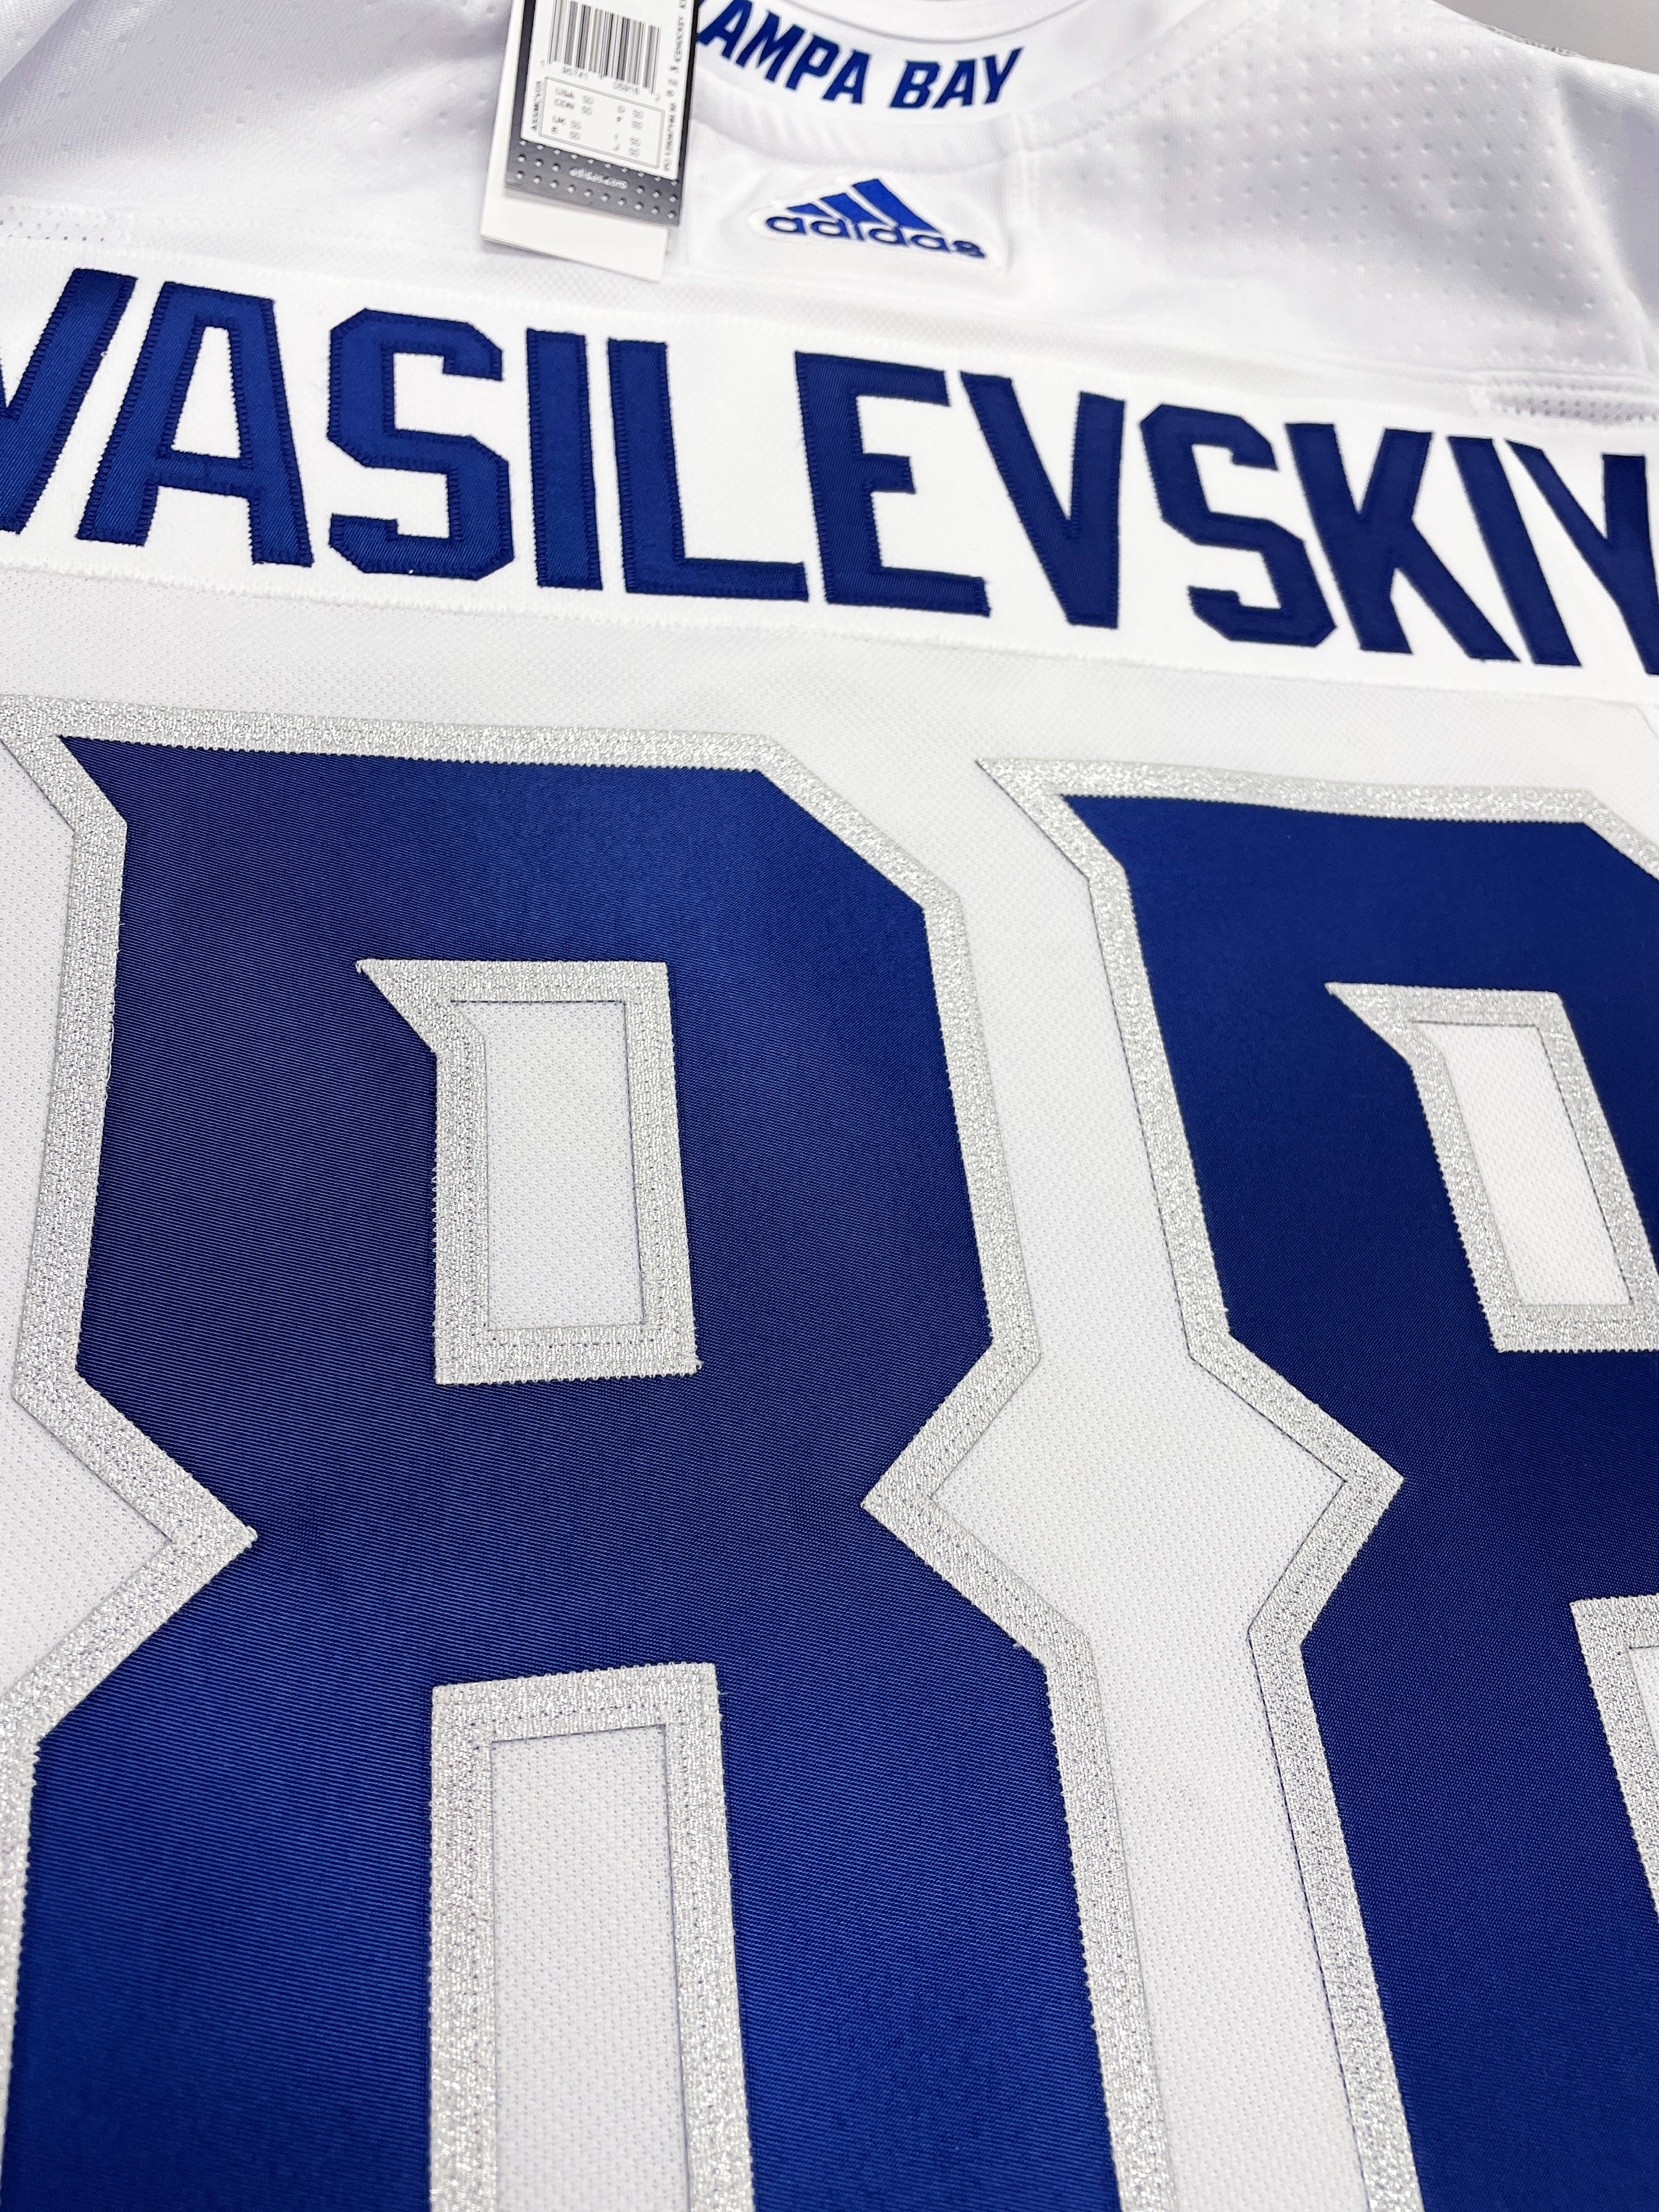 Andrei Vasilevskiy Tampa Bay Lightning adidas Primegreen Authentic Pro  Player Jersey - Blue